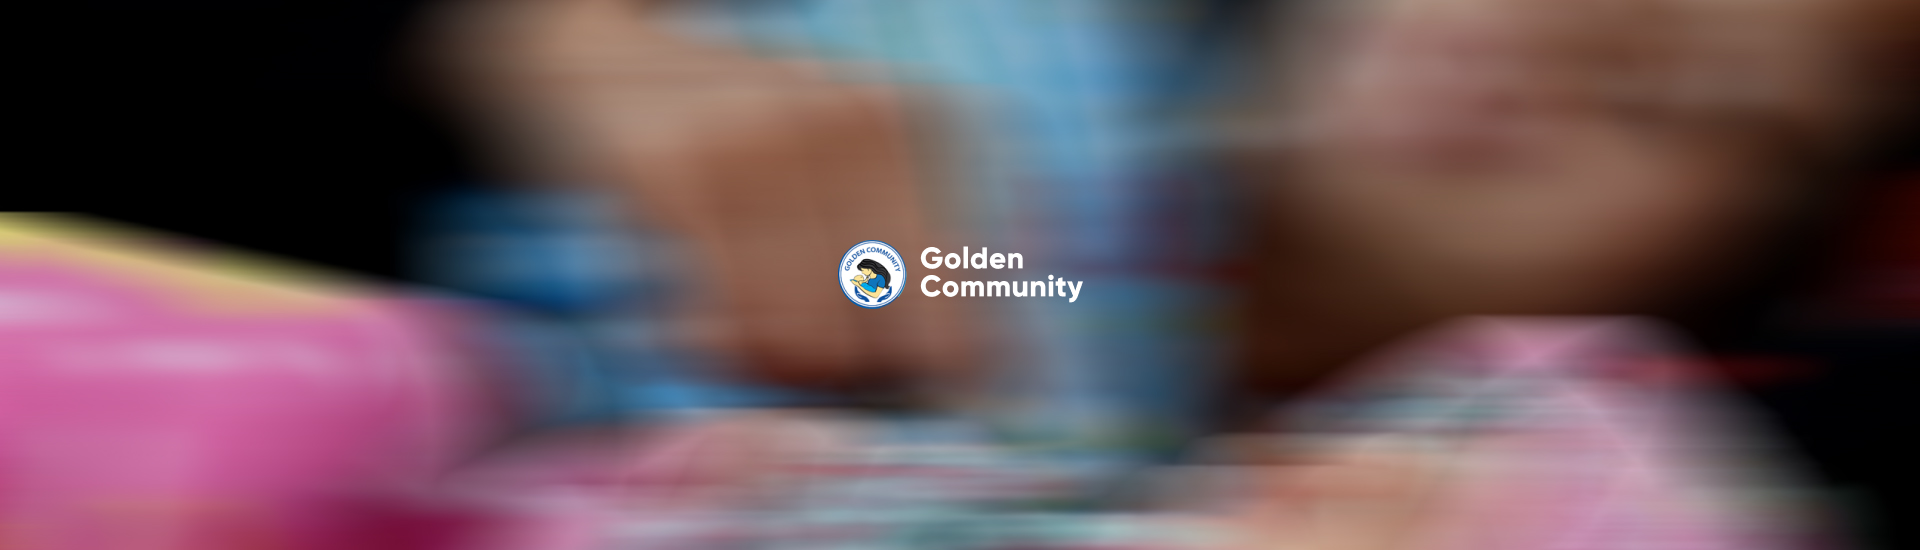 Golden Community